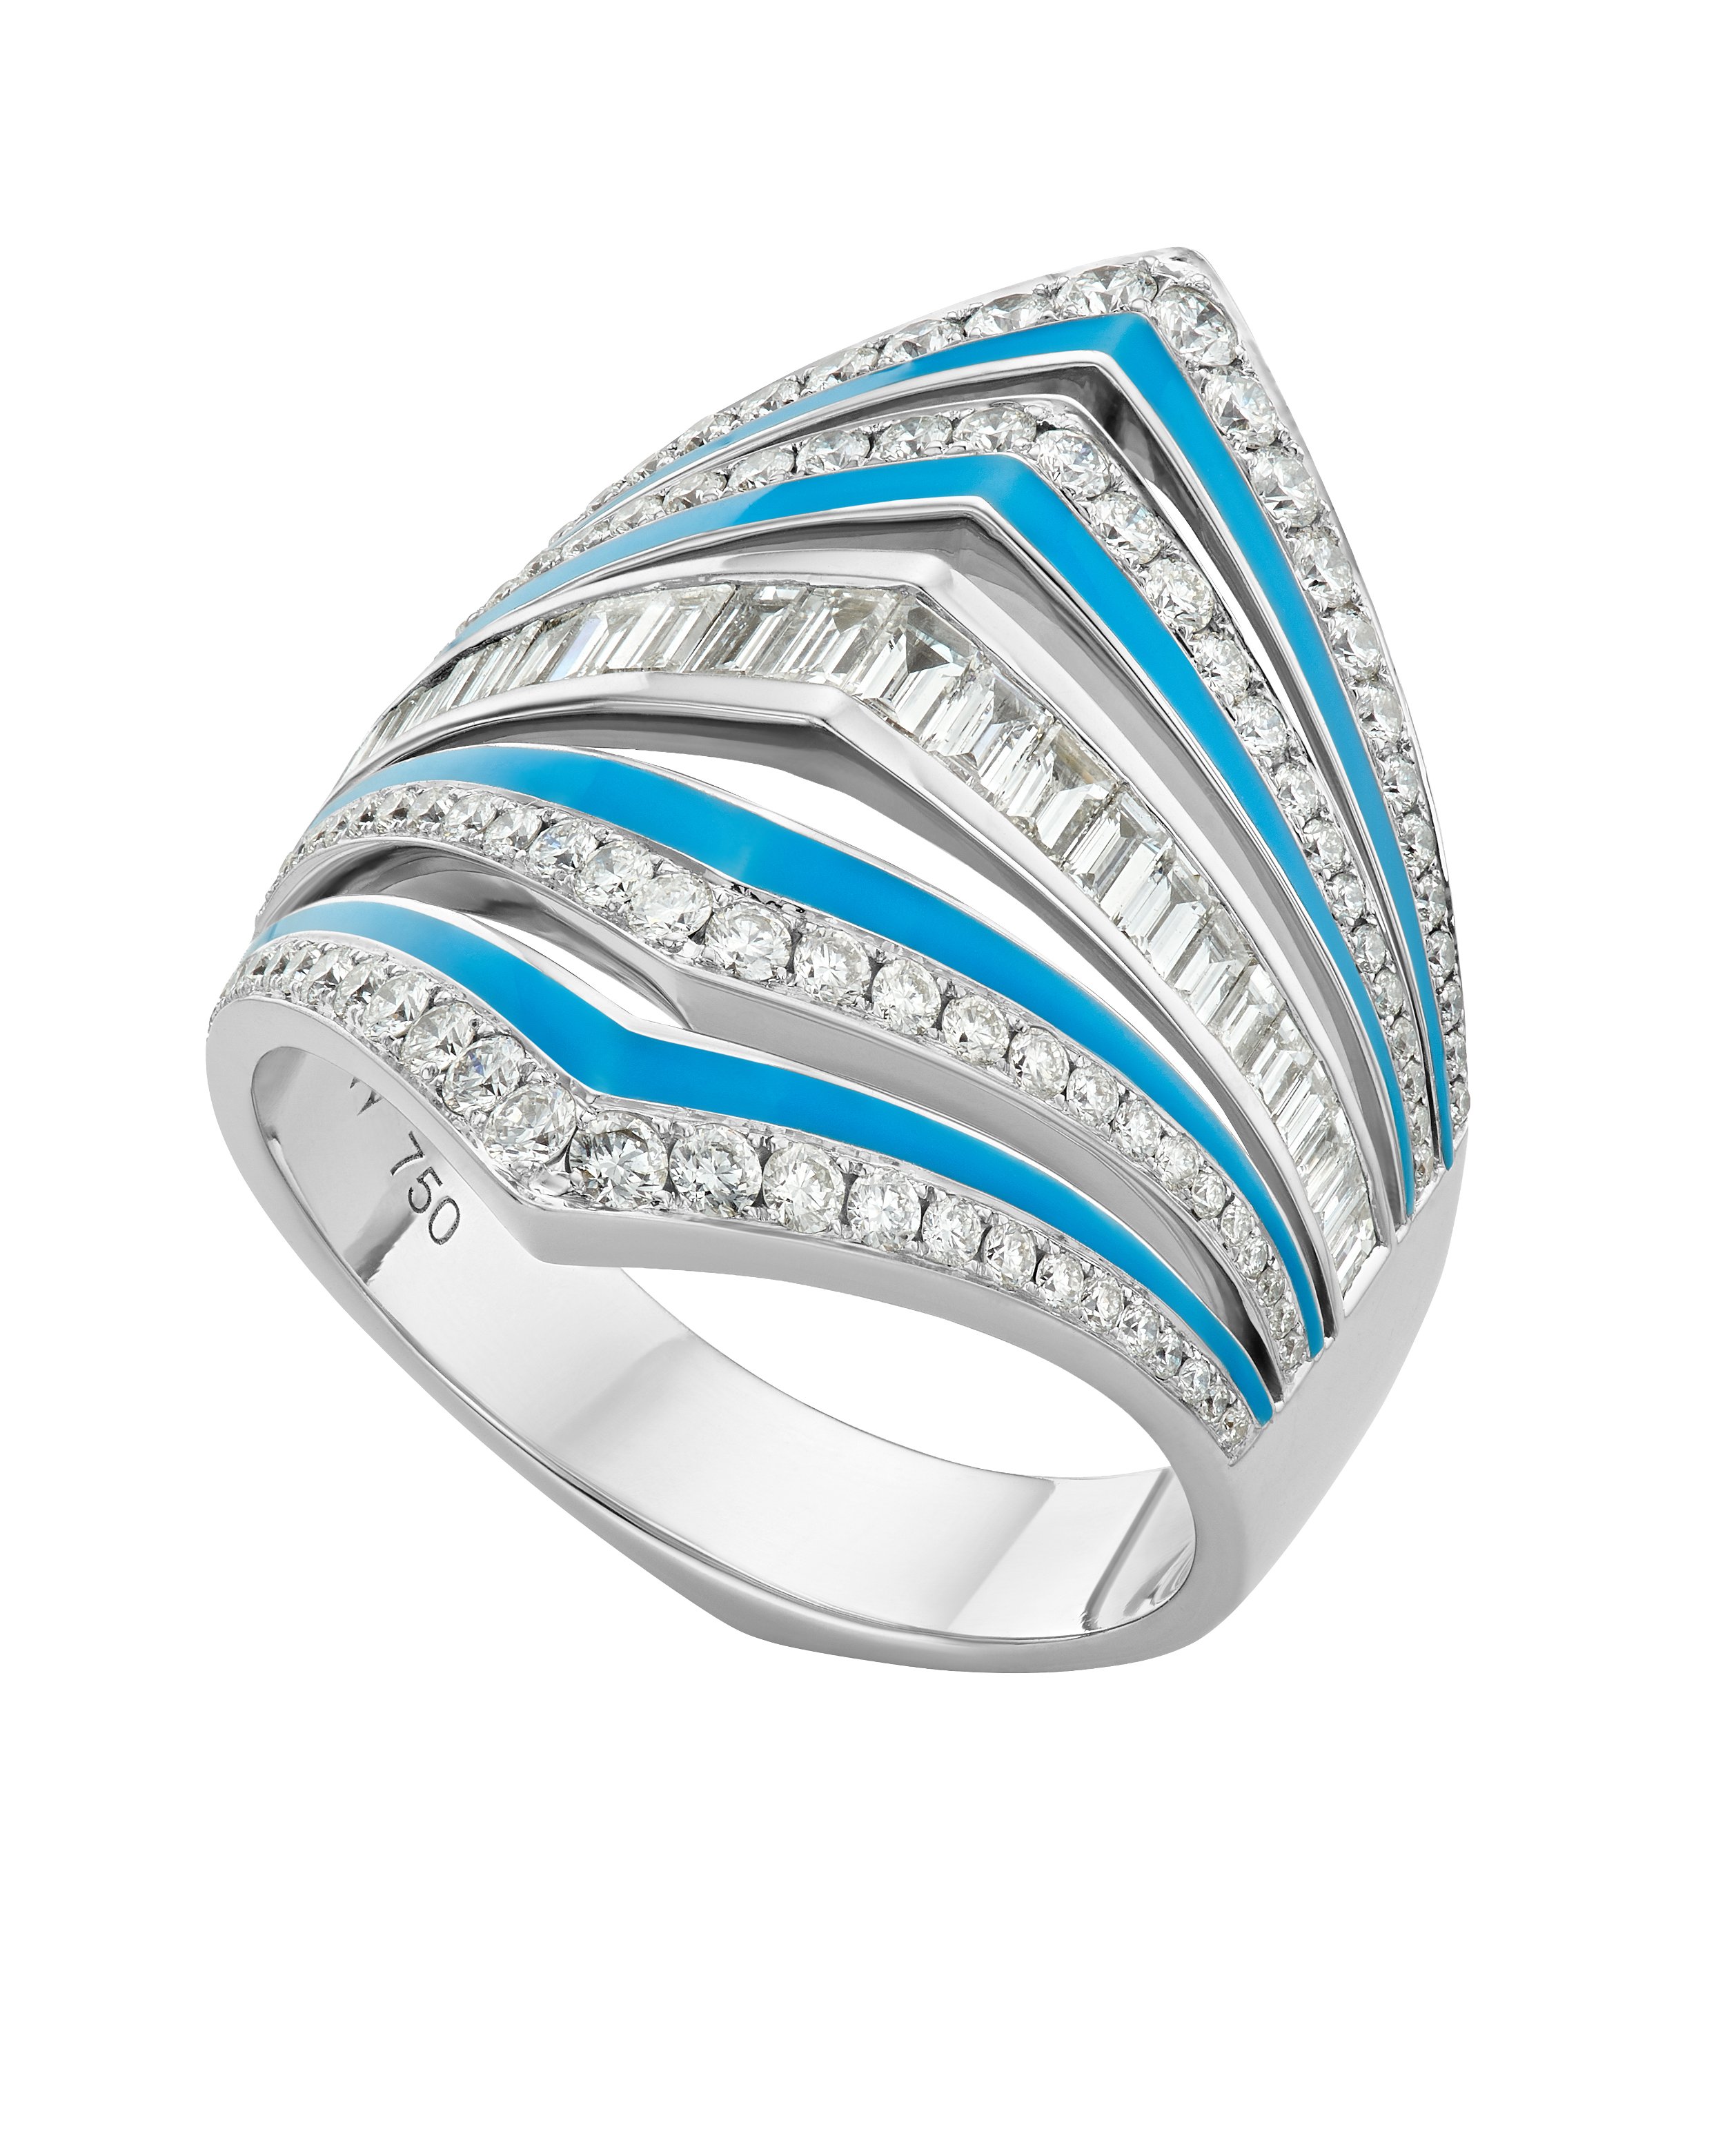 Vertigo Gaining Perspective Ring with White Diamonds and Light Blue Enamel in 18kt White Gold - Size 7